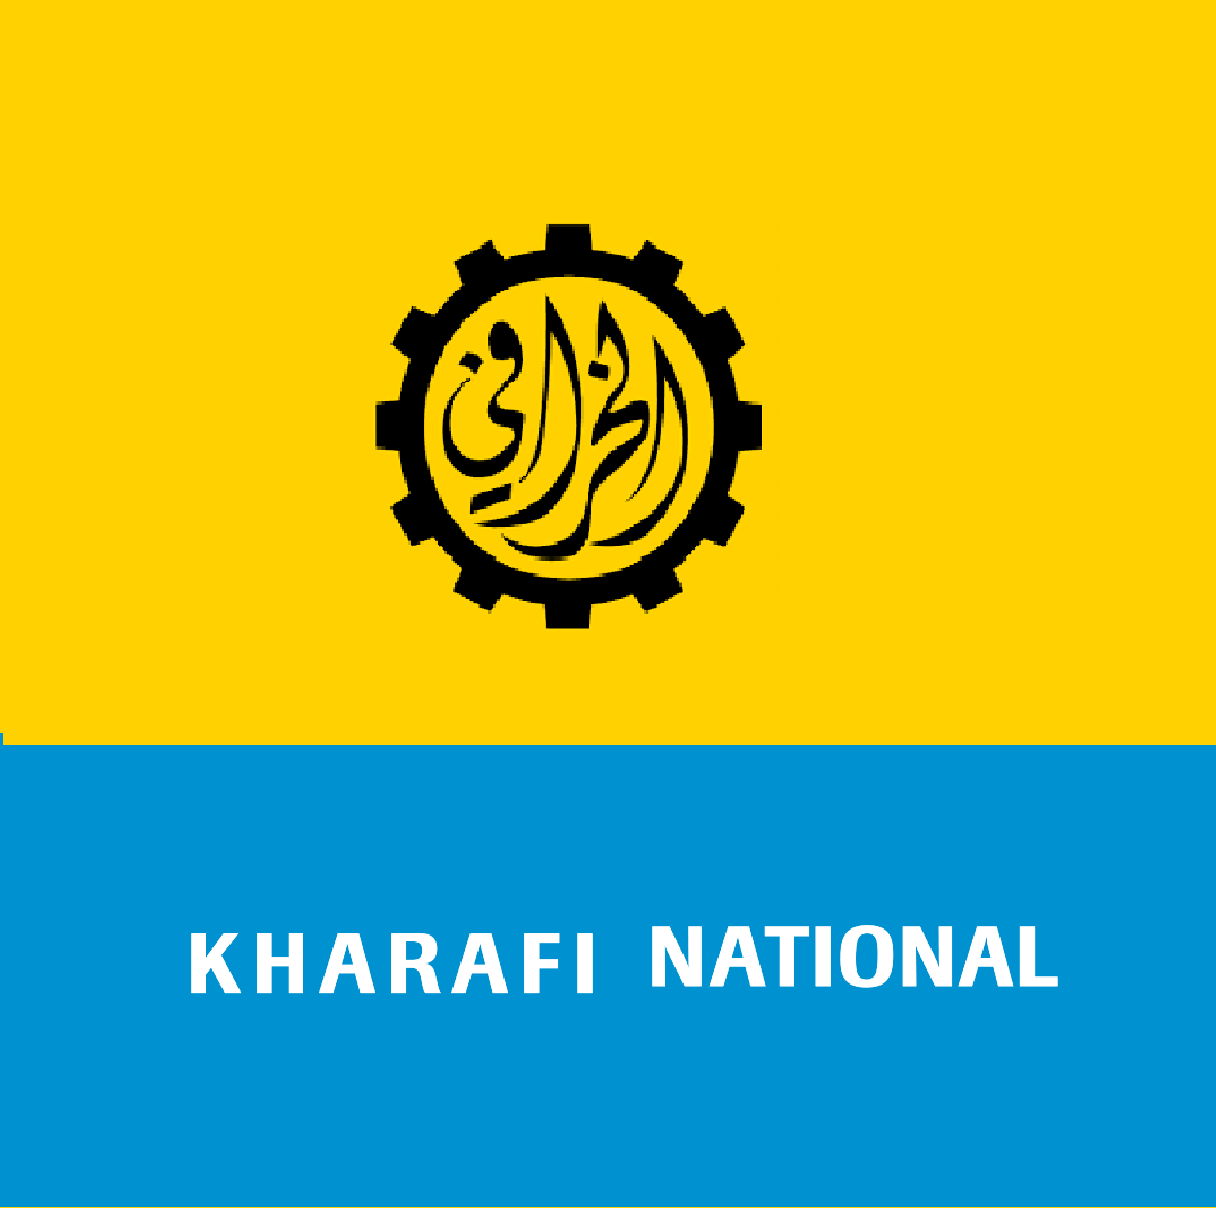 Kharafi National